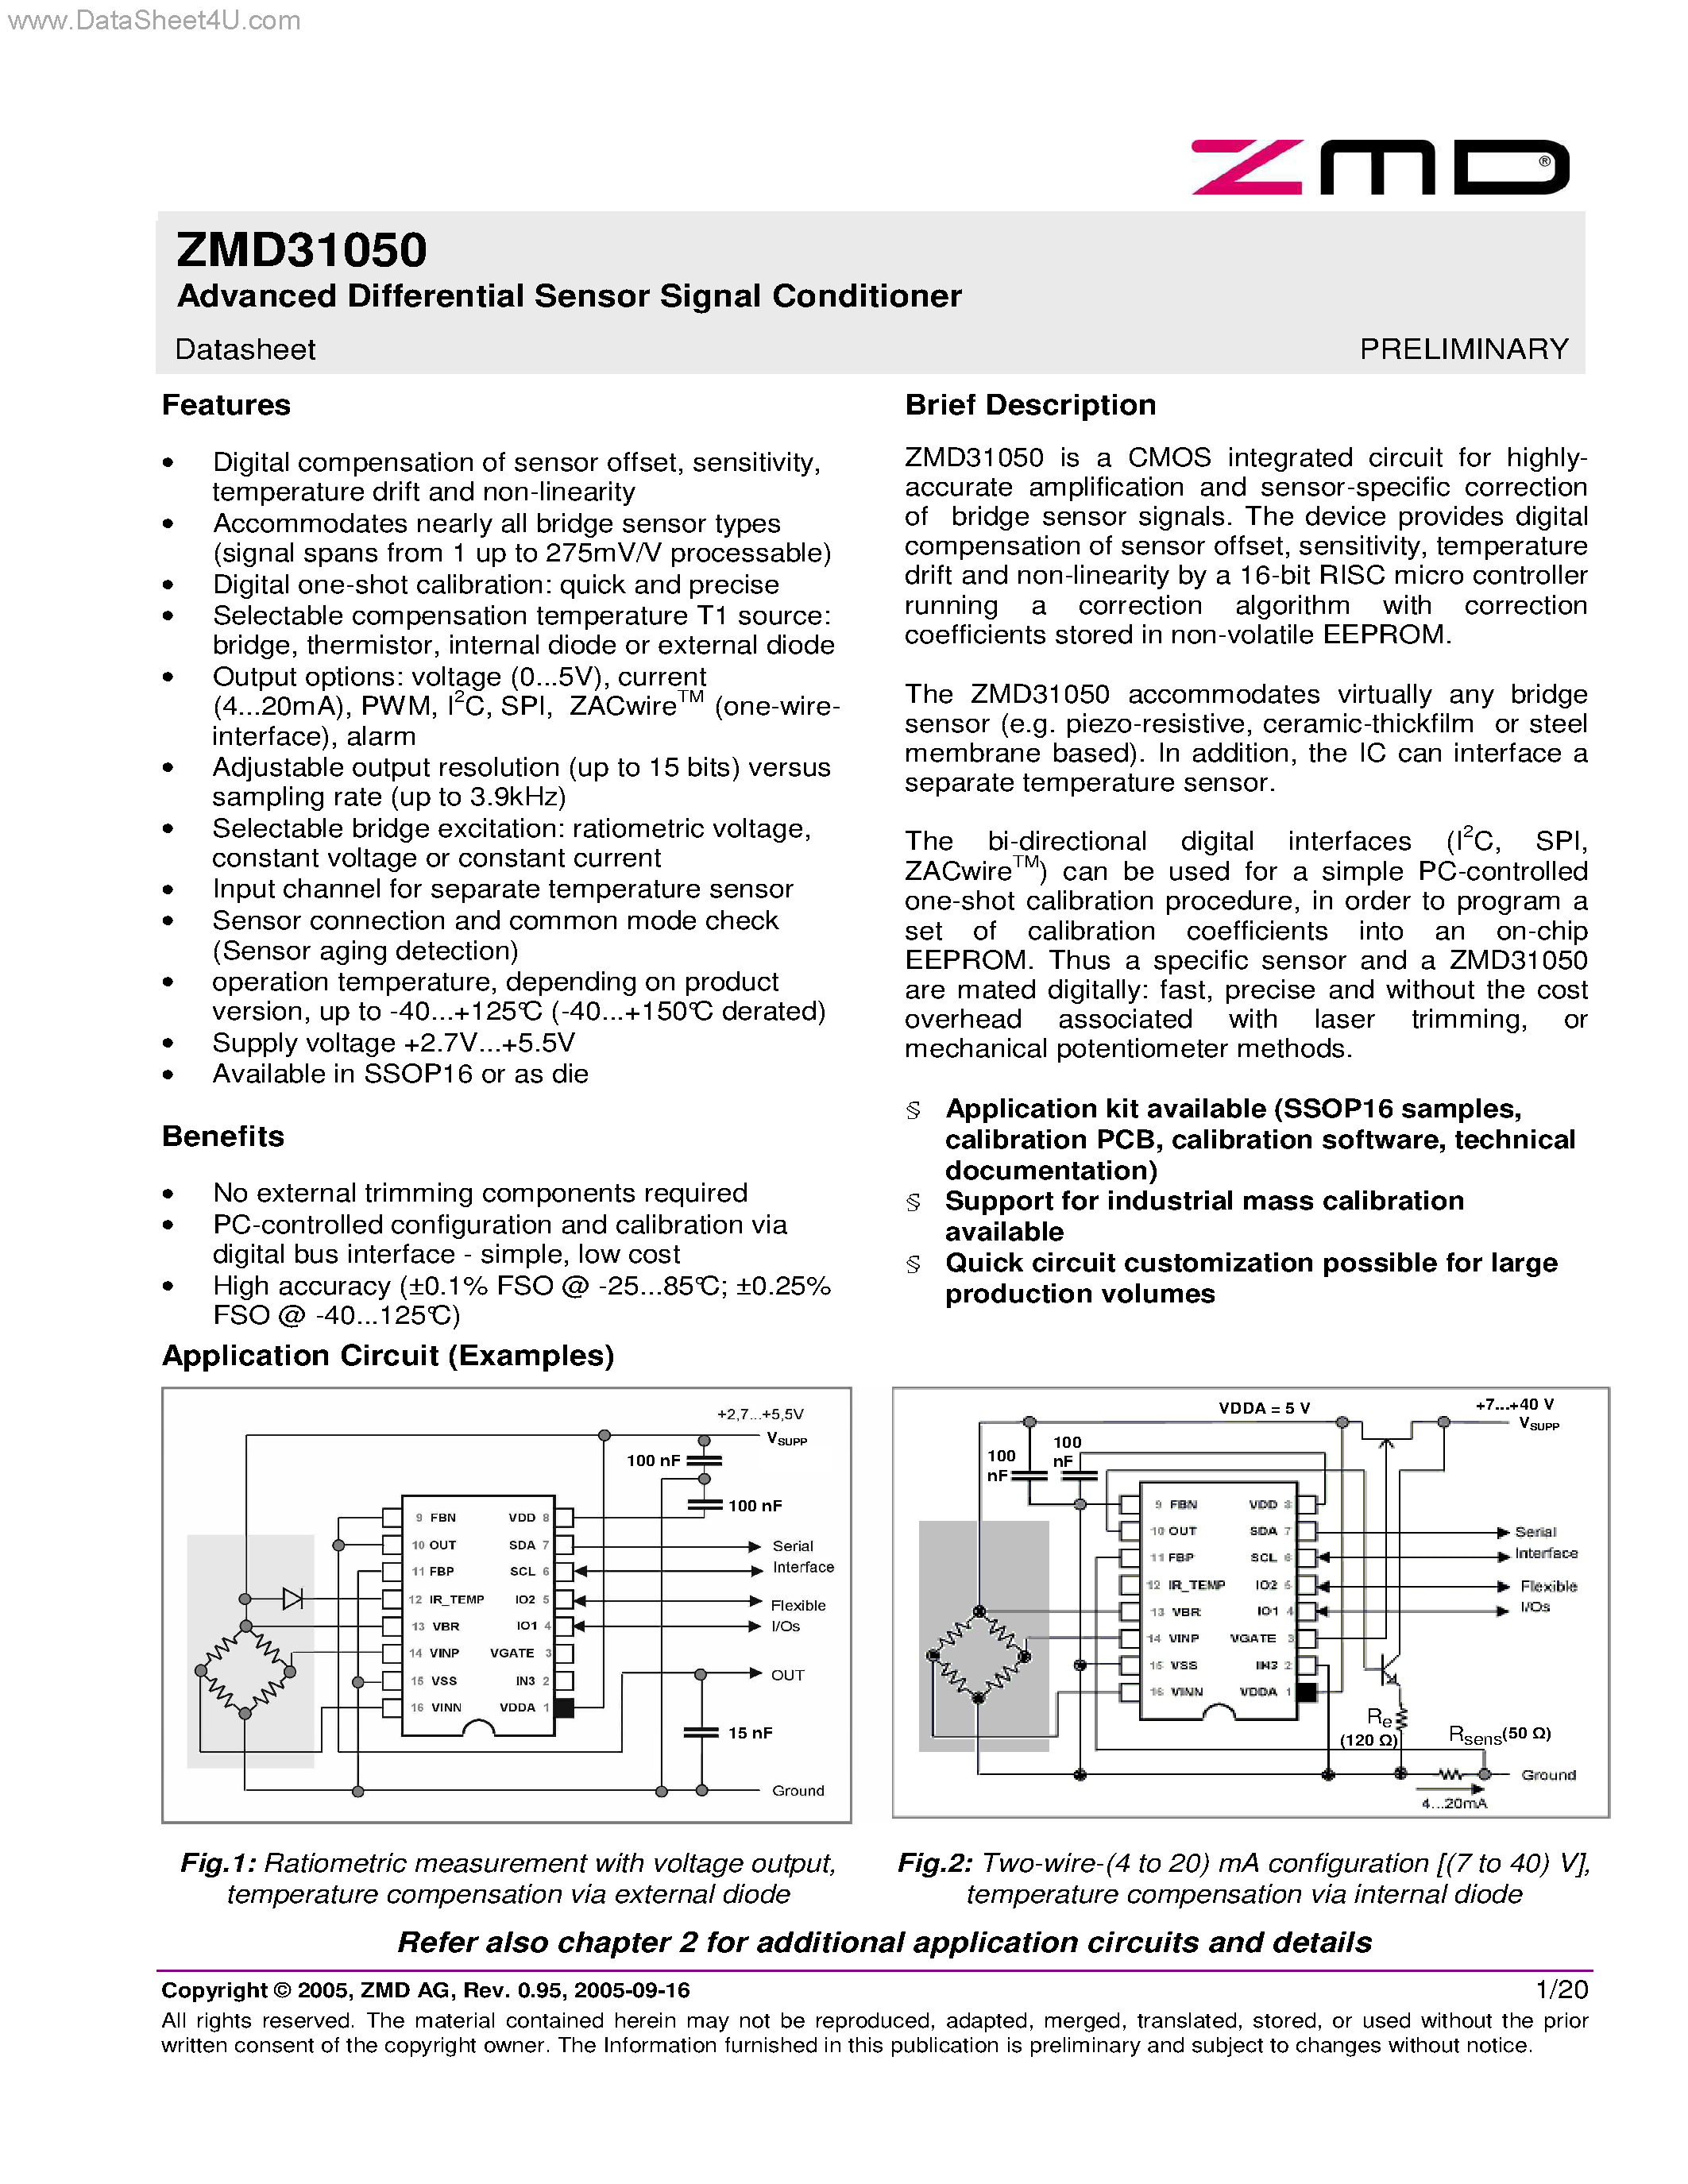 Даташит ZMD31050 - Advanced Differential Sensor Signal Conditioner страница 1